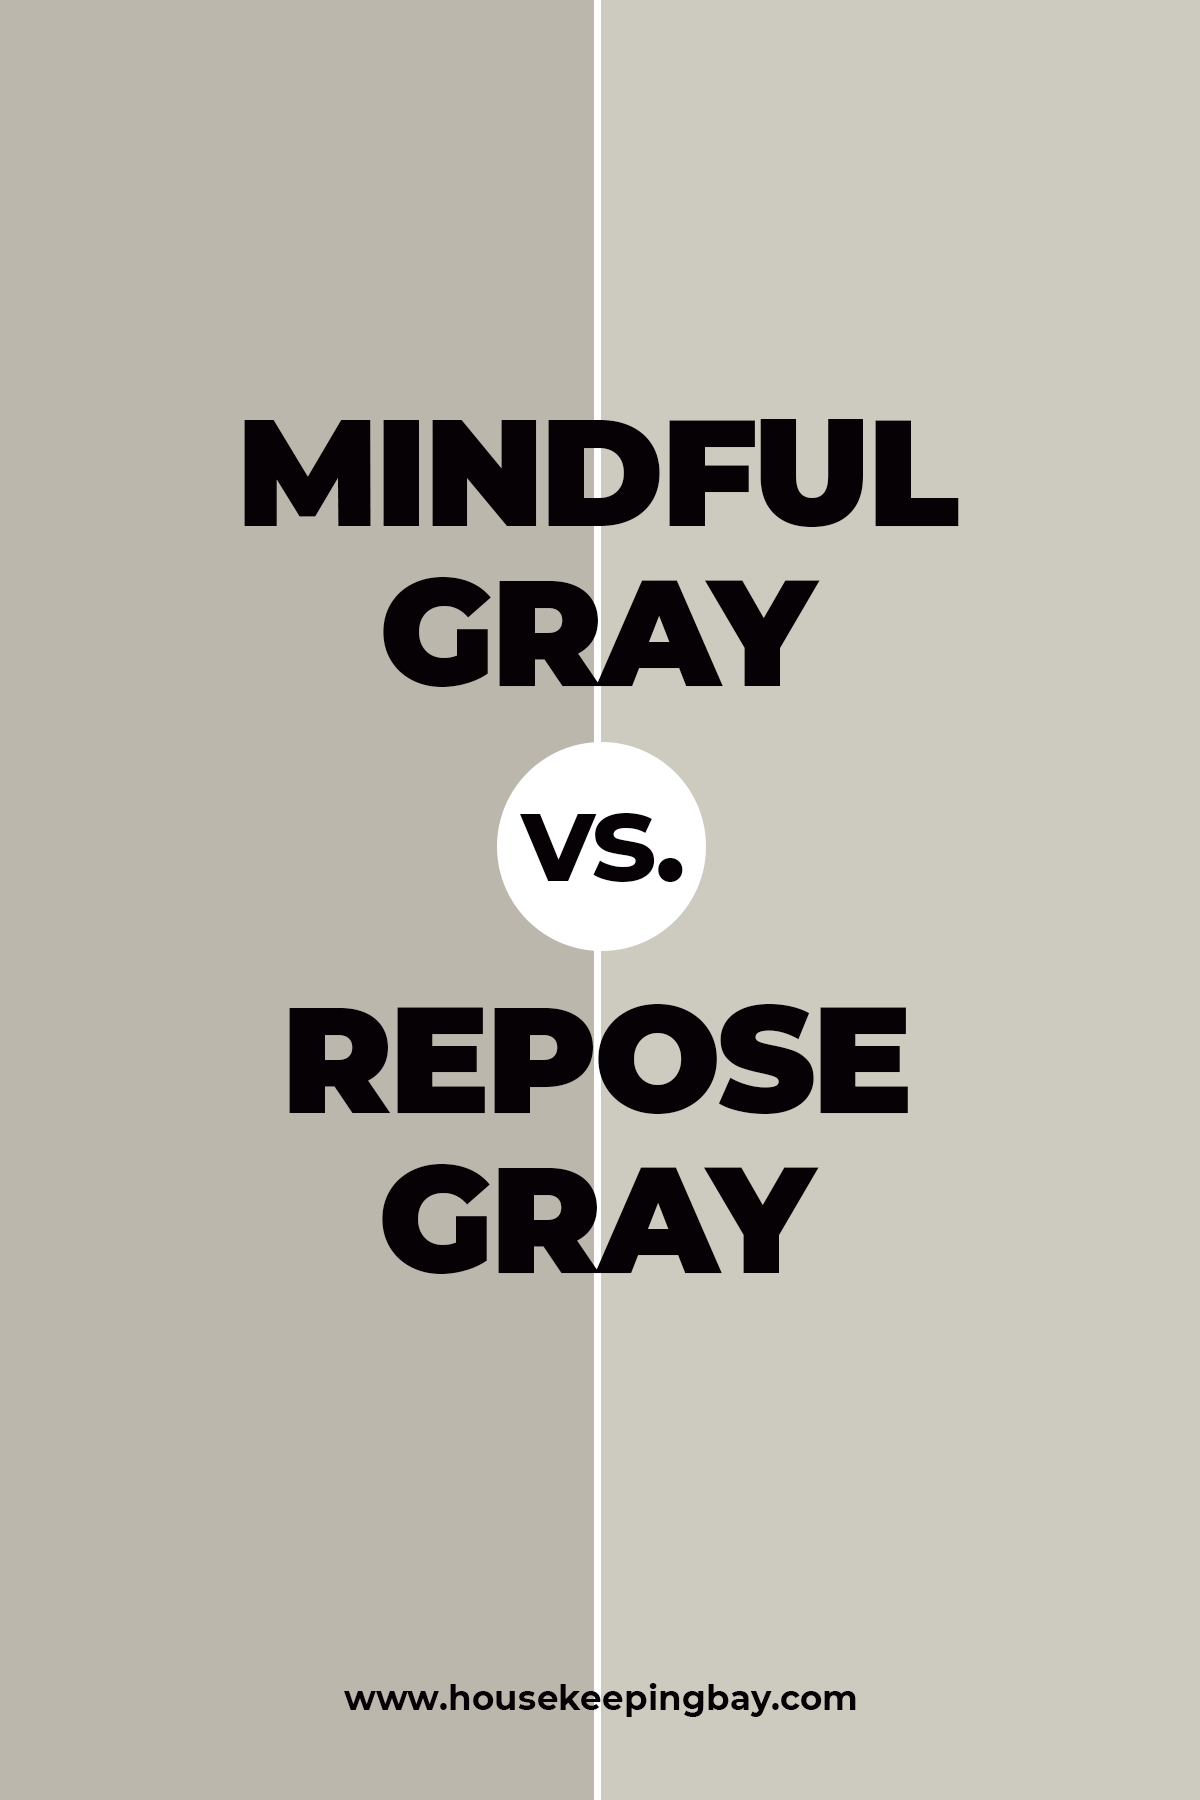 Mindful Gray vs Repose Gray